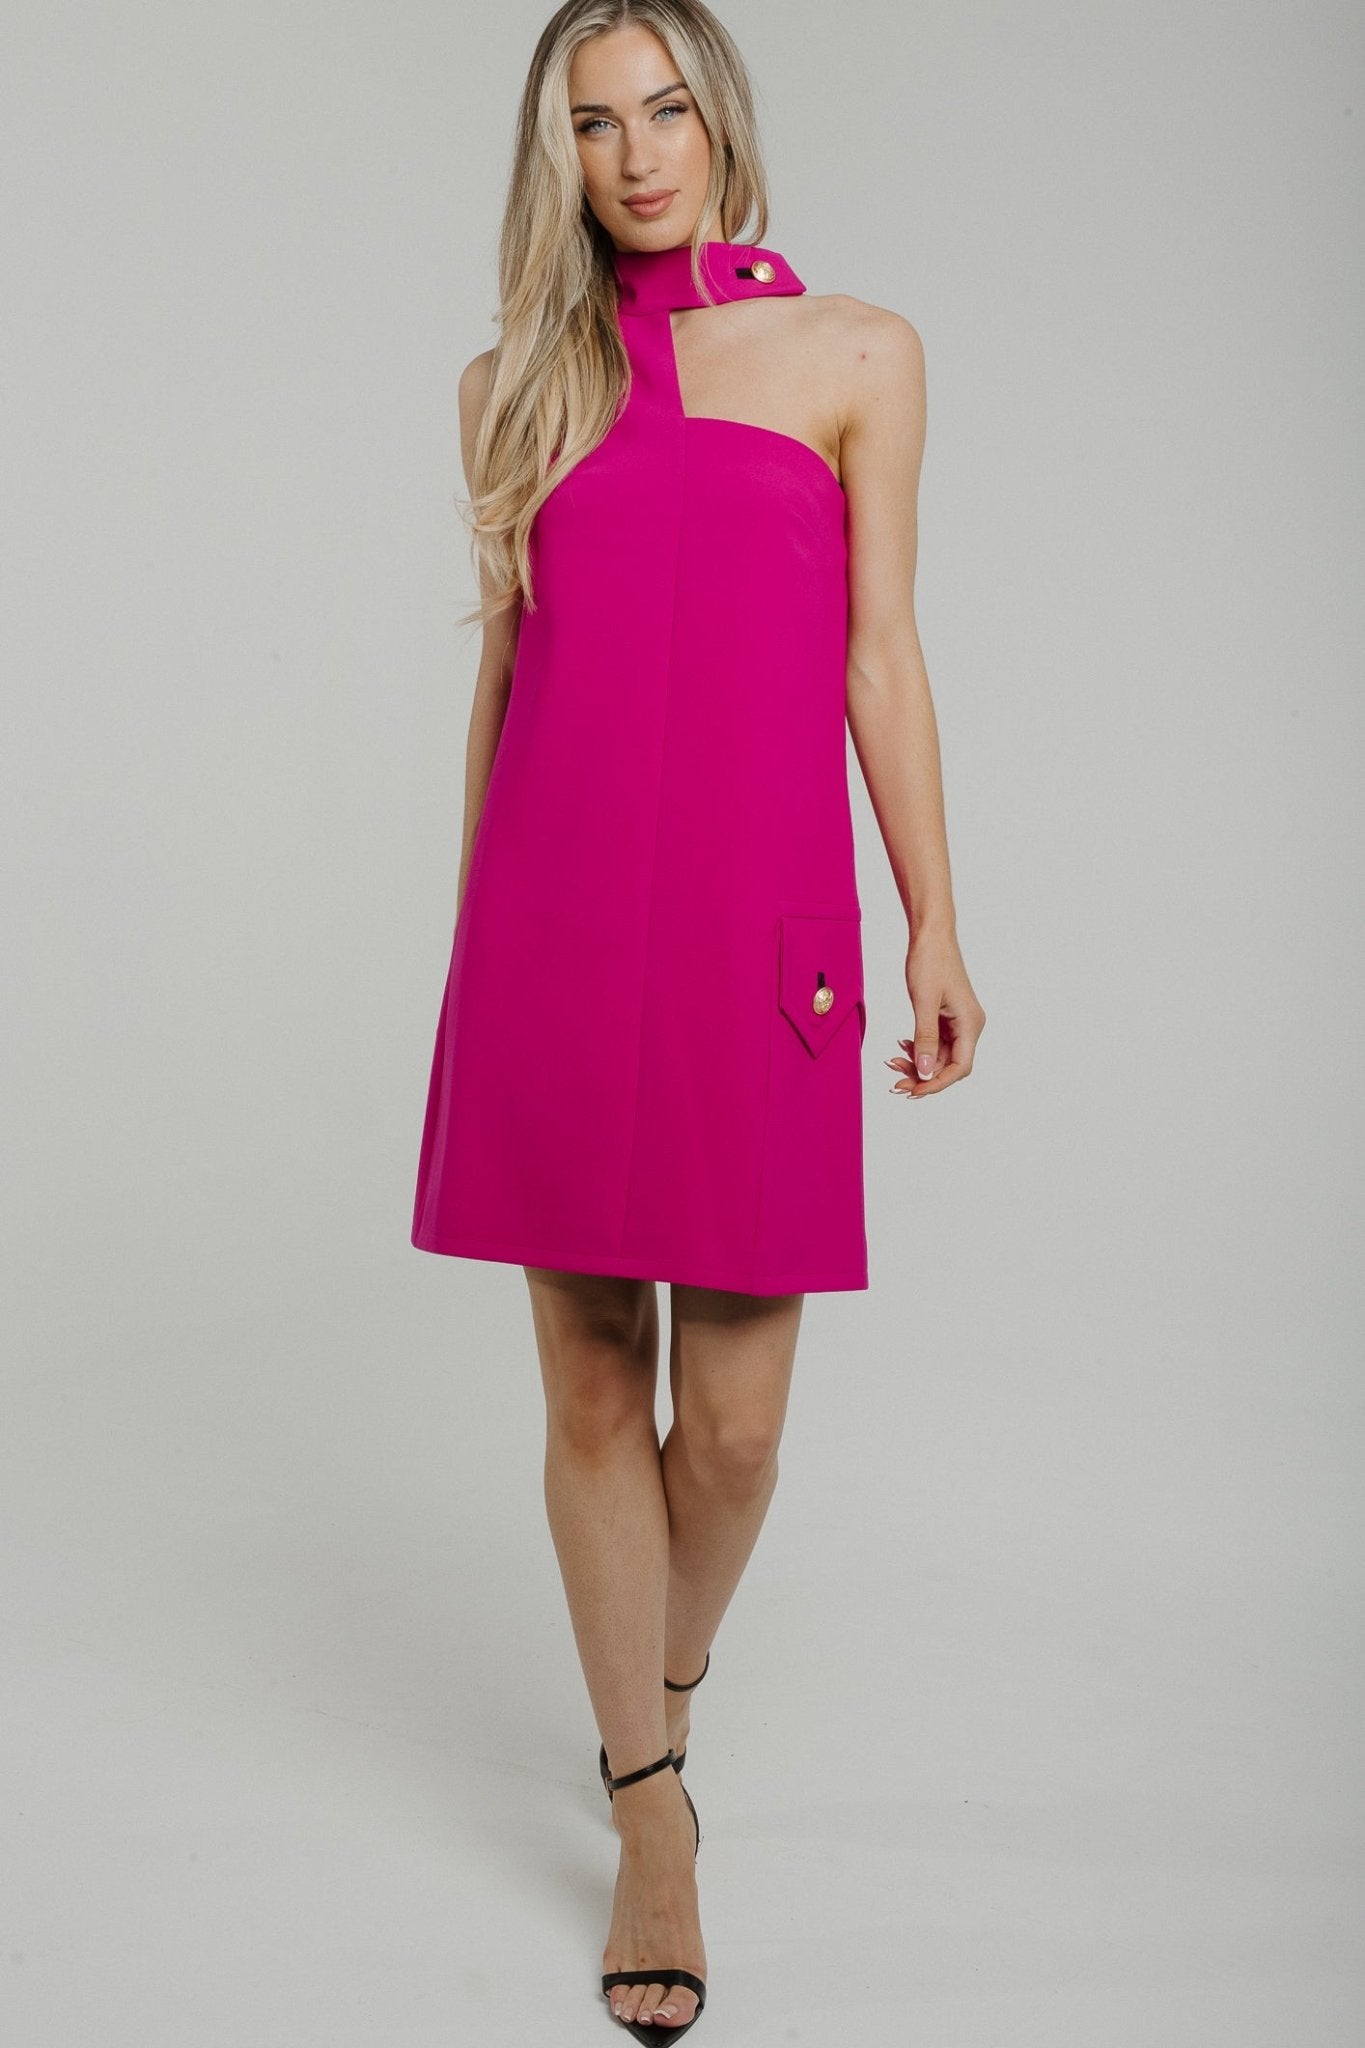 Marissa Cut Out Dress In Pink - The Walk in Wardrobe